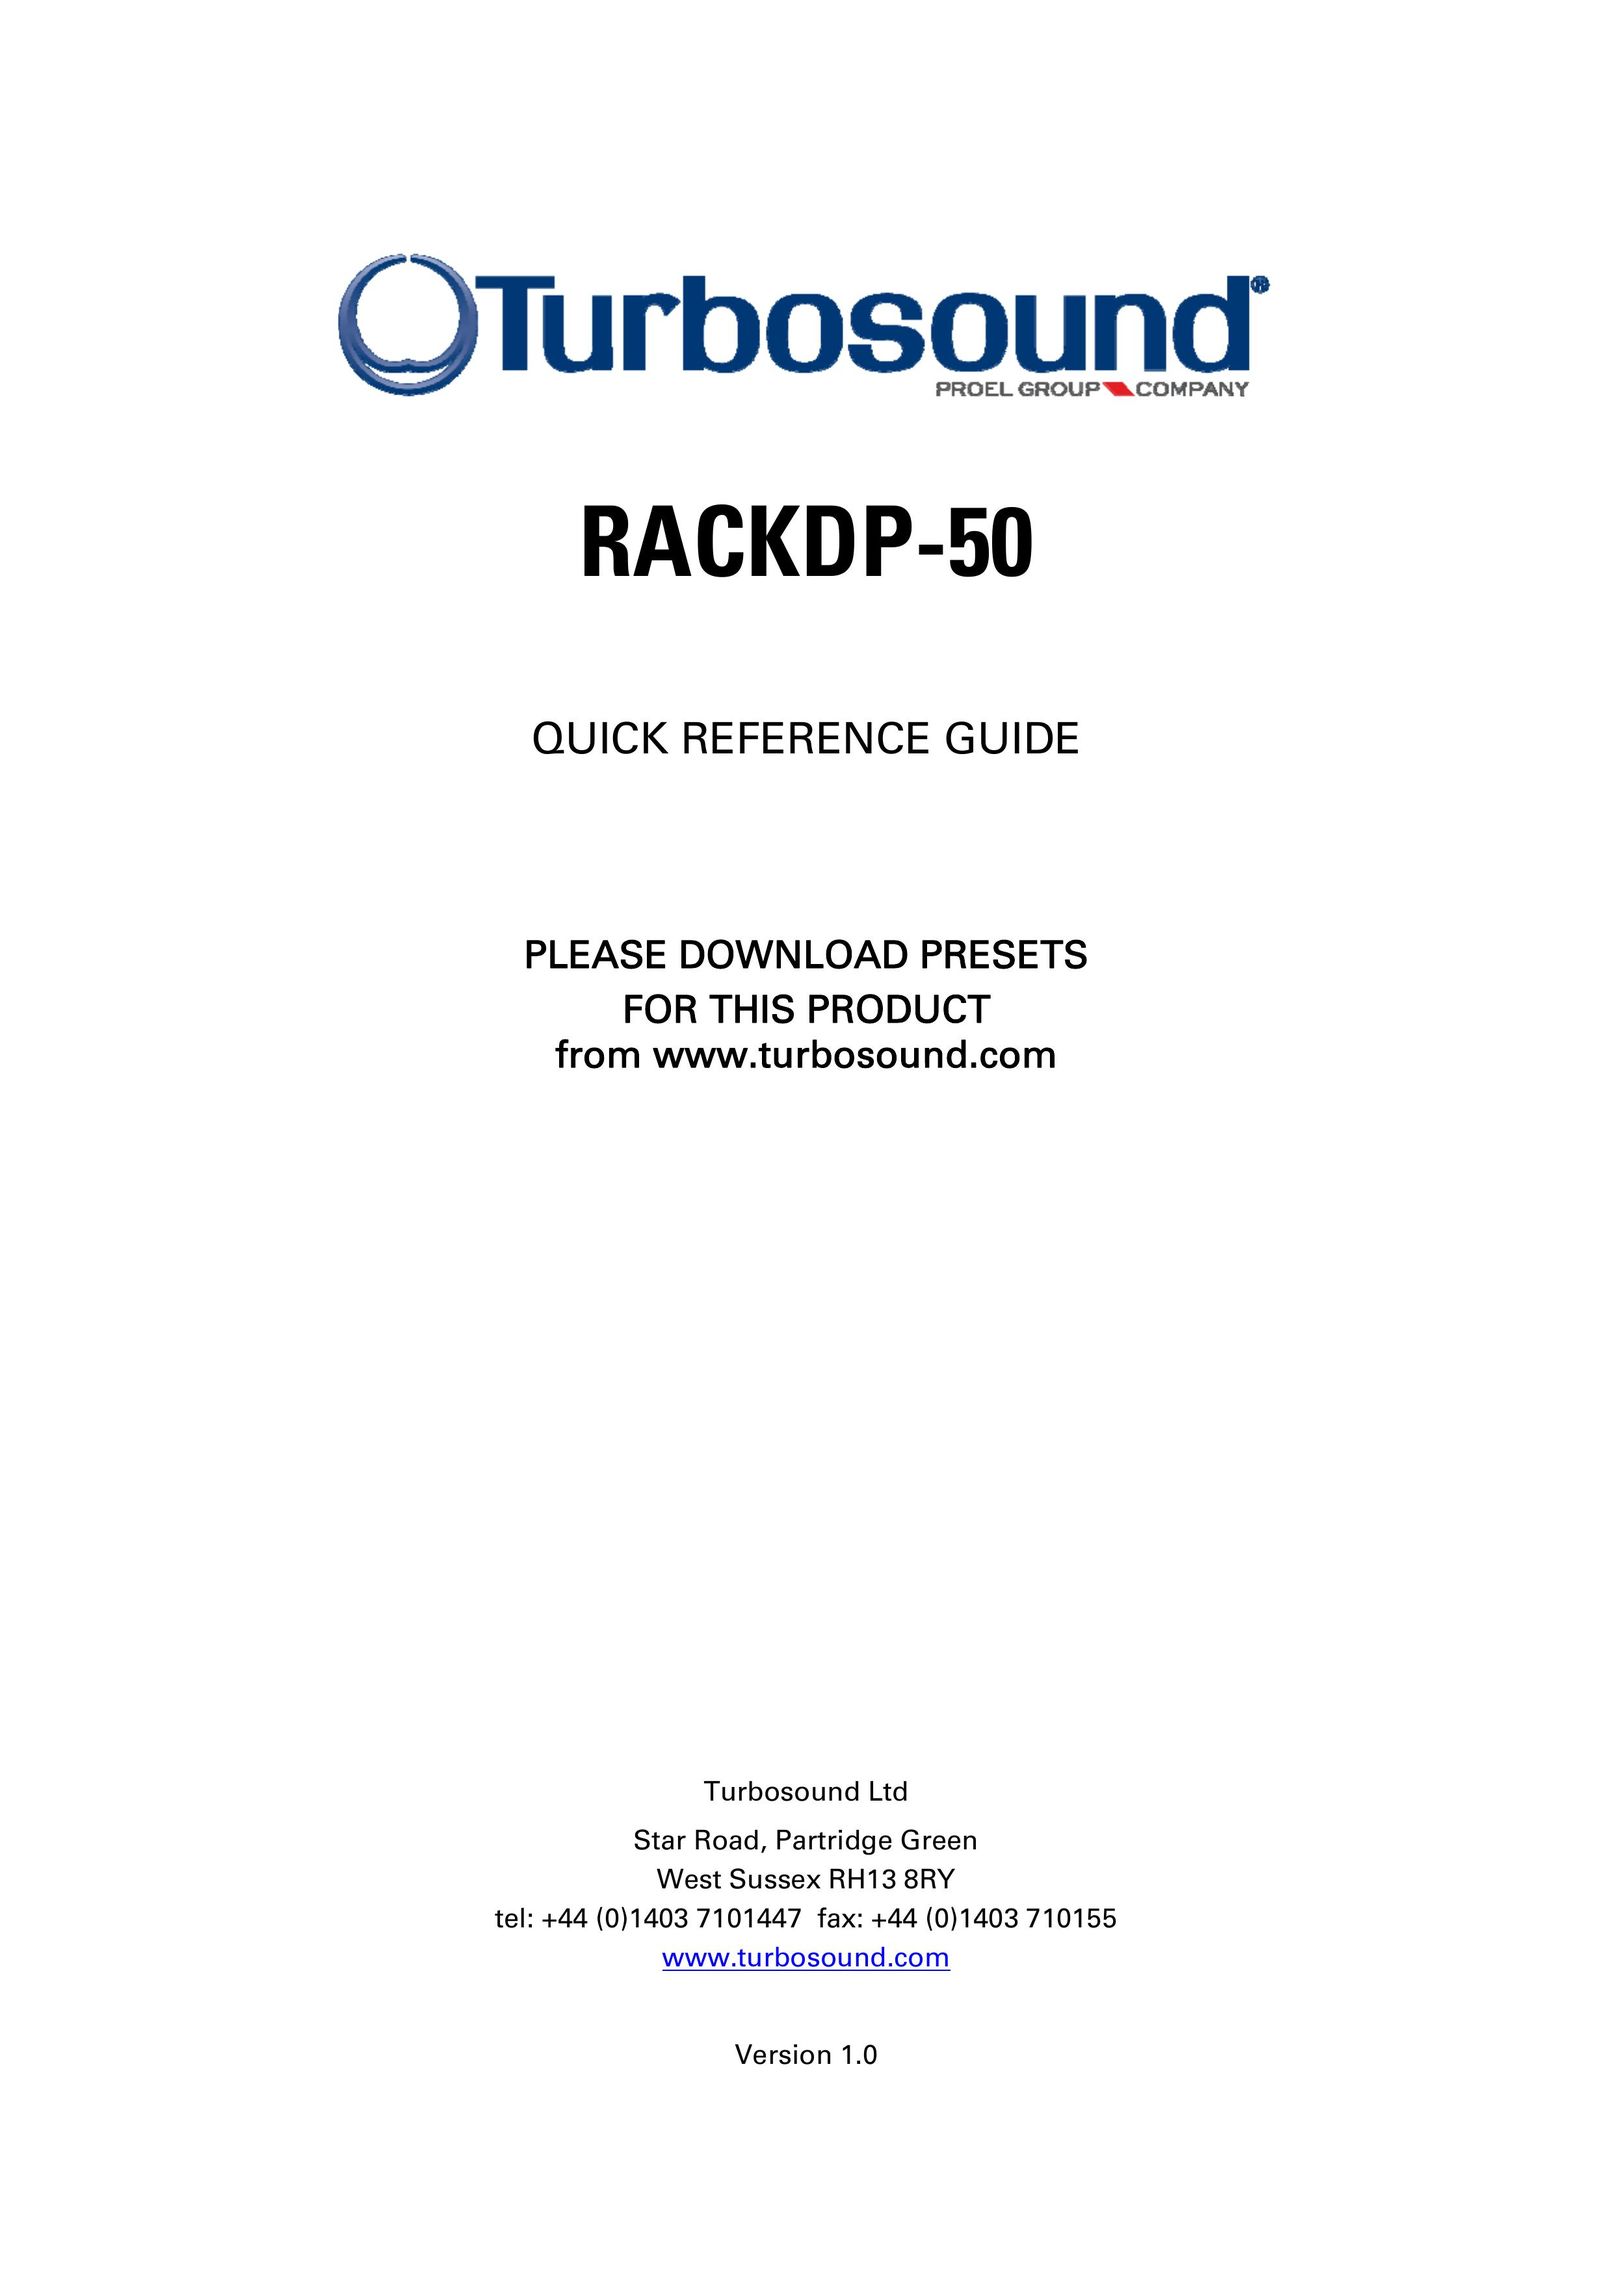 Turbosound RACKDP-50 Computer Drive User Manual